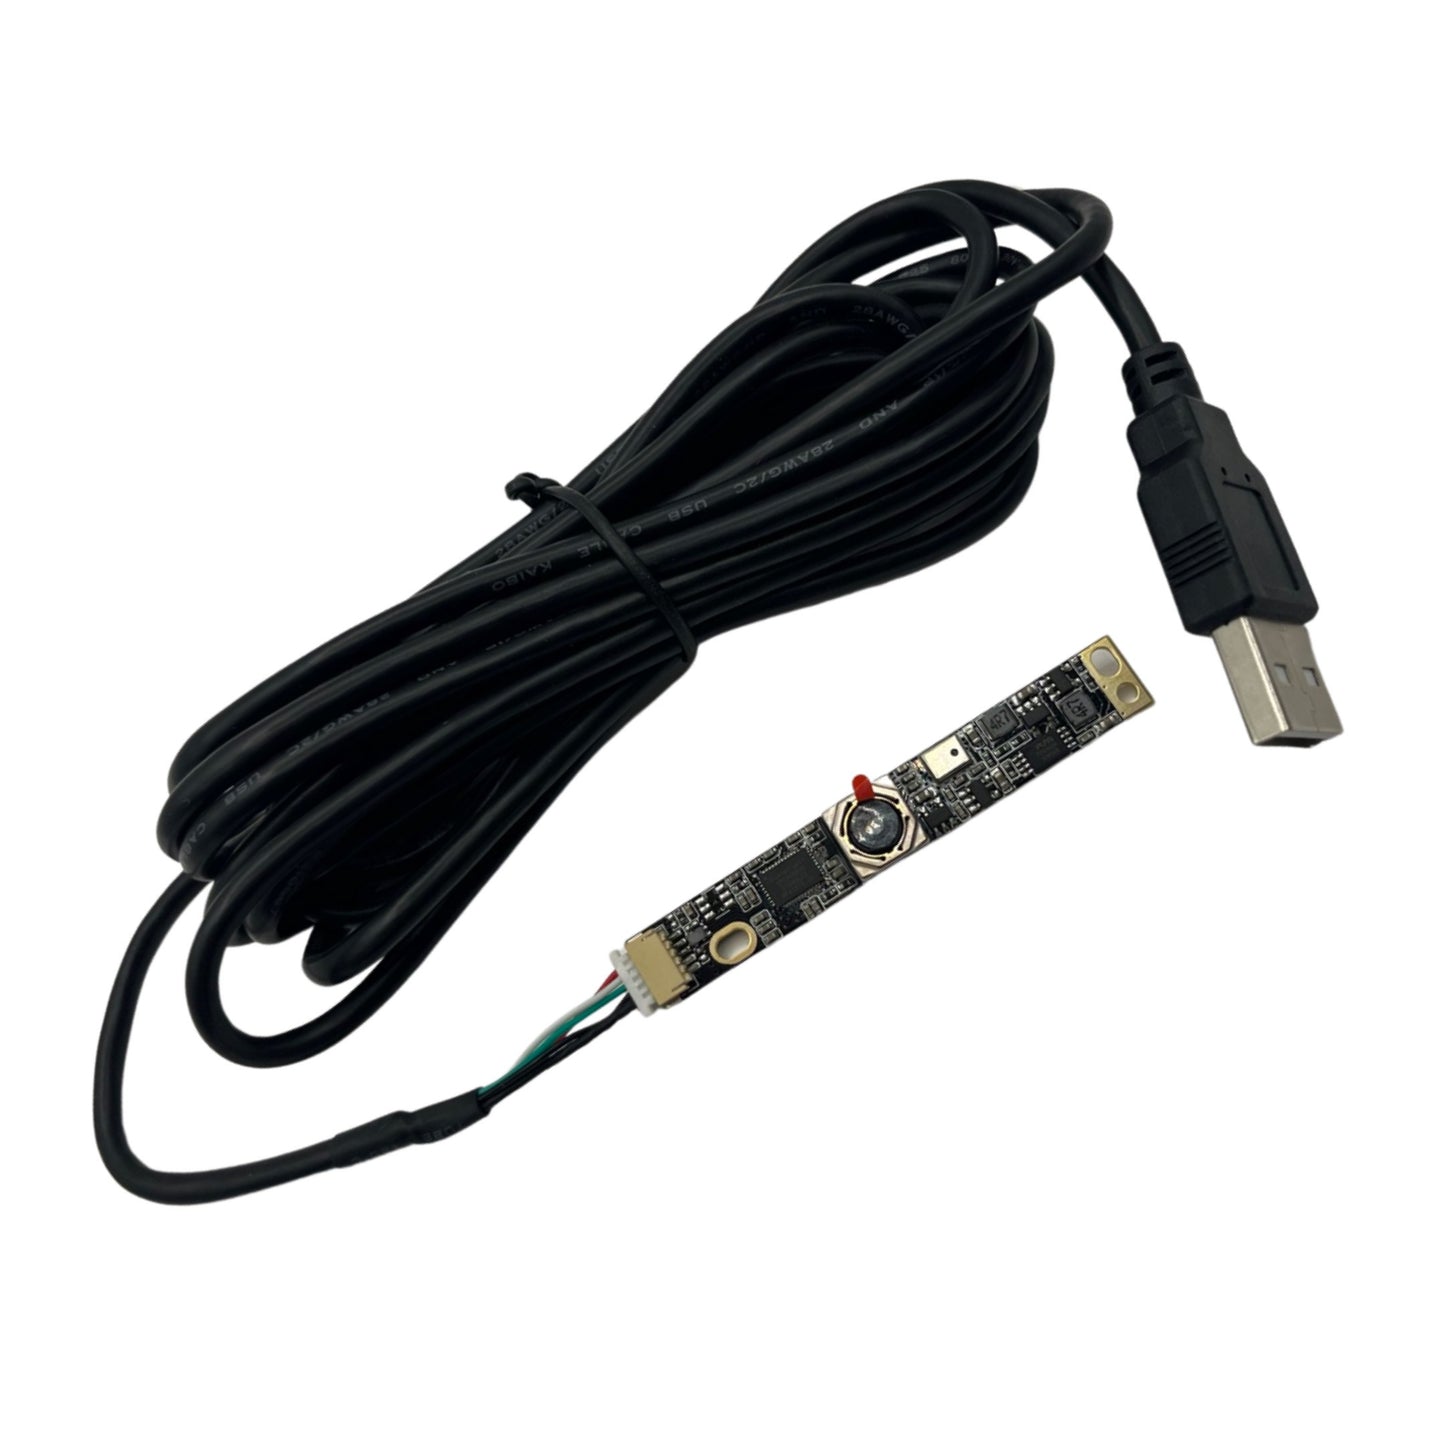 LightBurn Camera Cable Management Kit - Cohesion3D